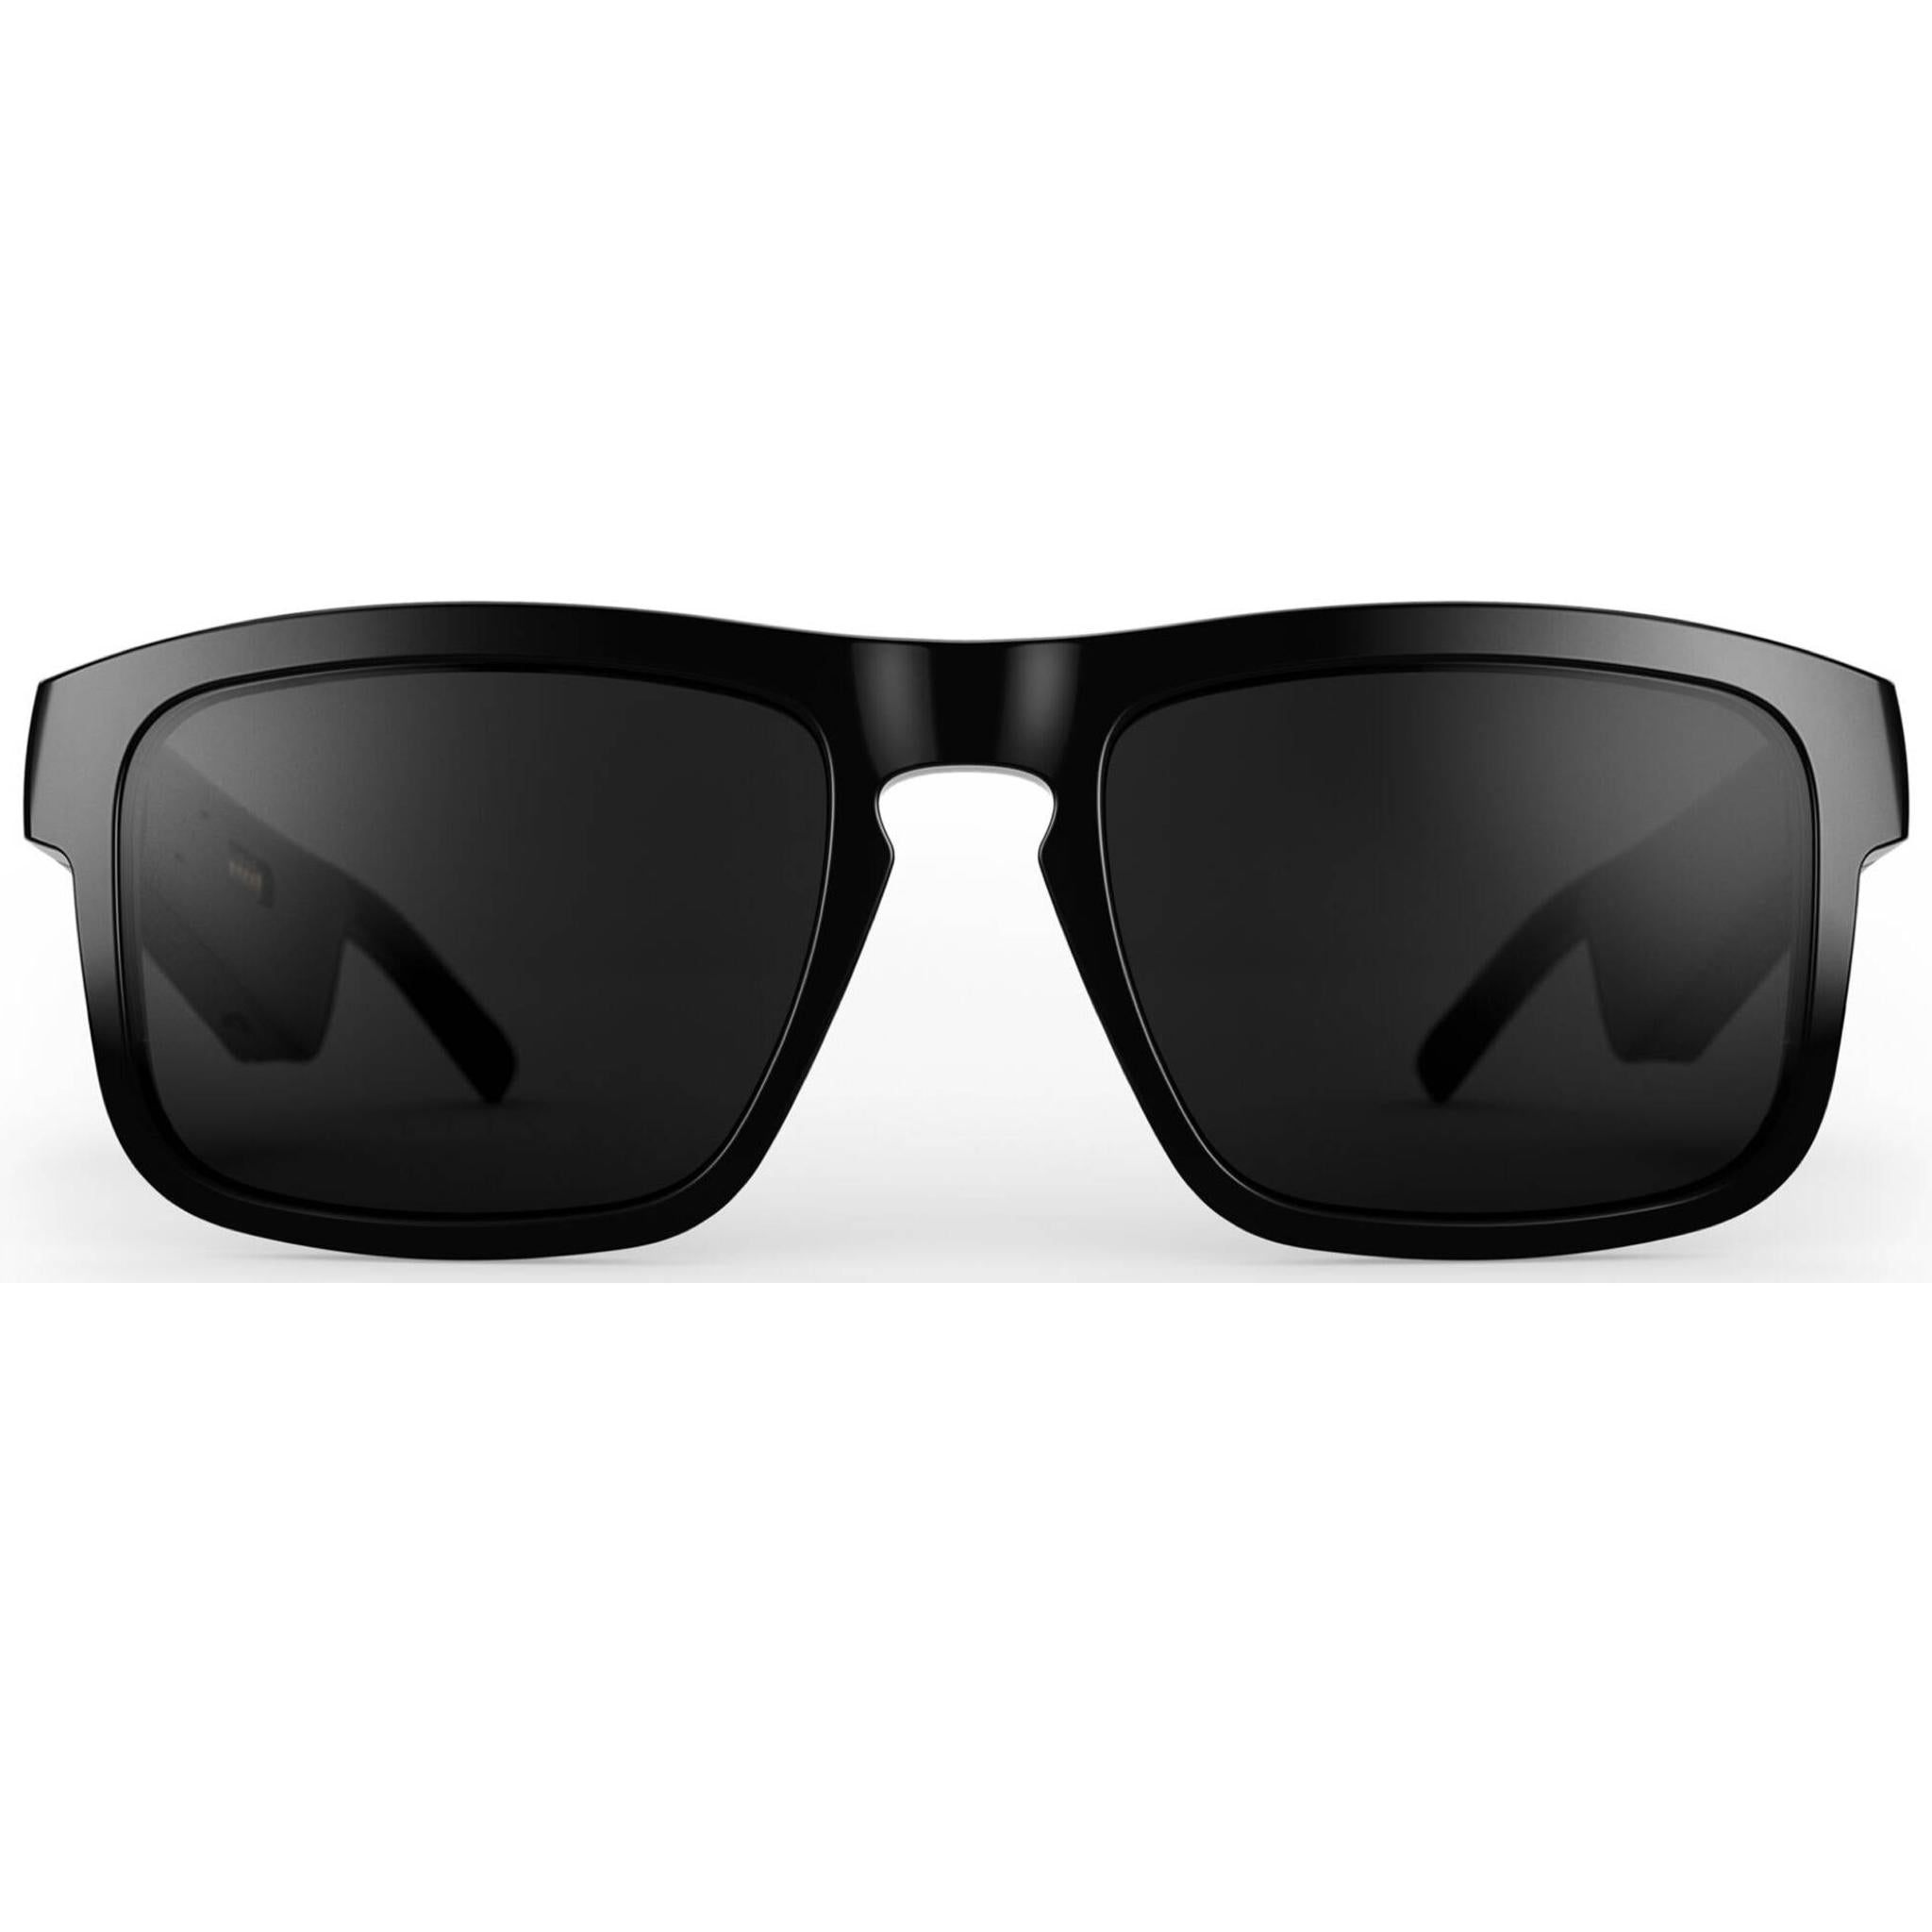 Bose Frames Tenor - Audio Sunglasses - AVStore